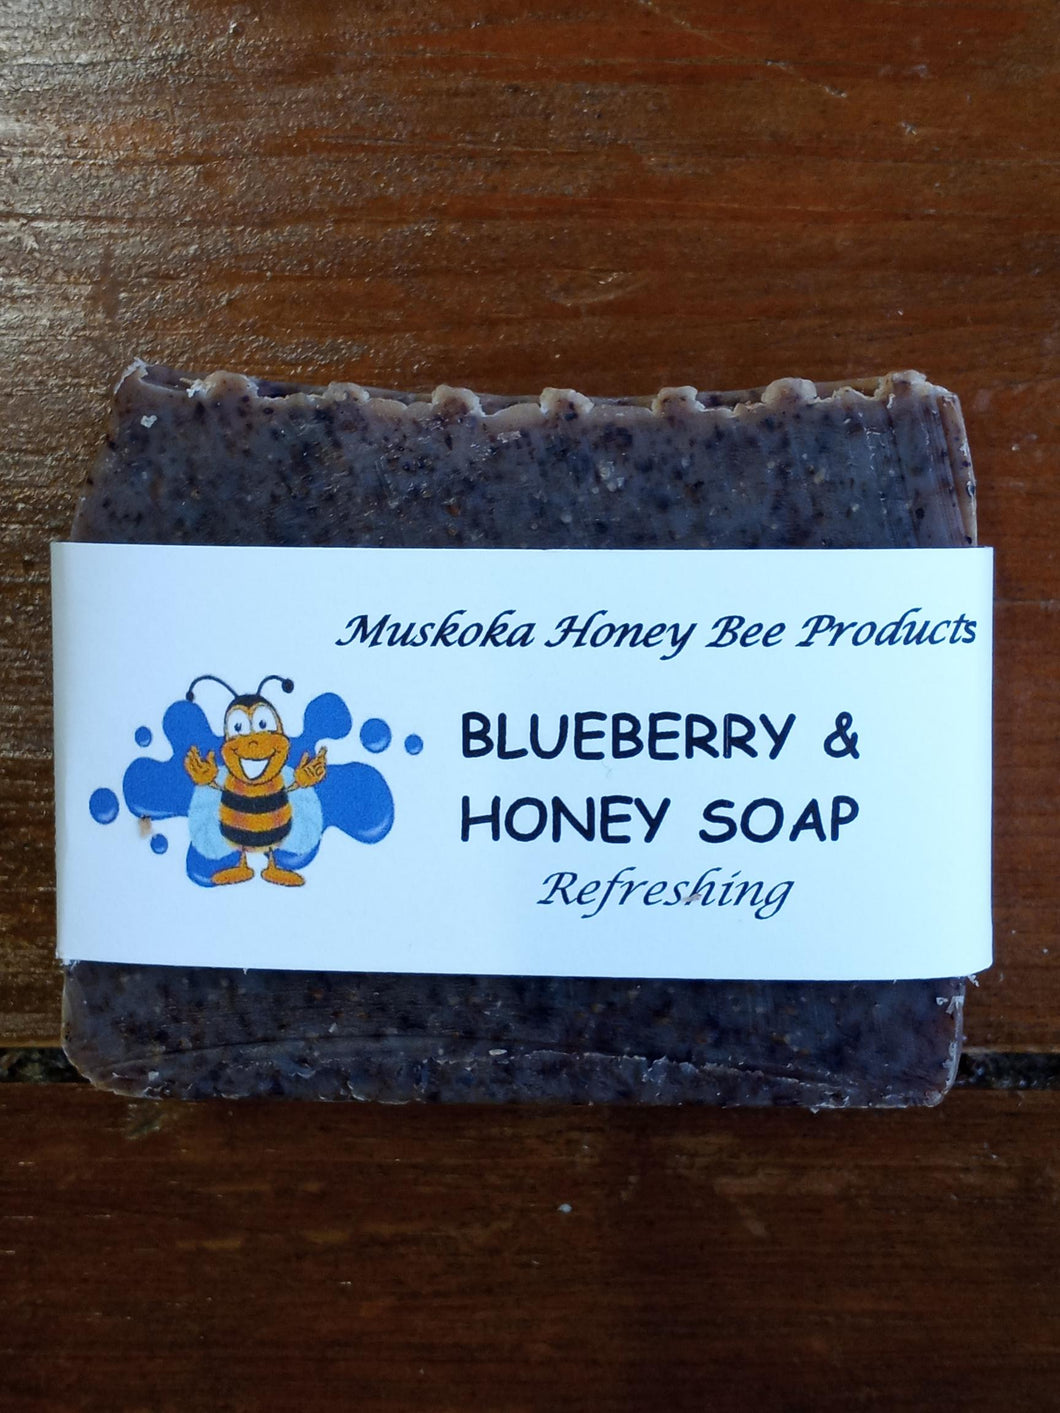 Blueberry & Honey Soap